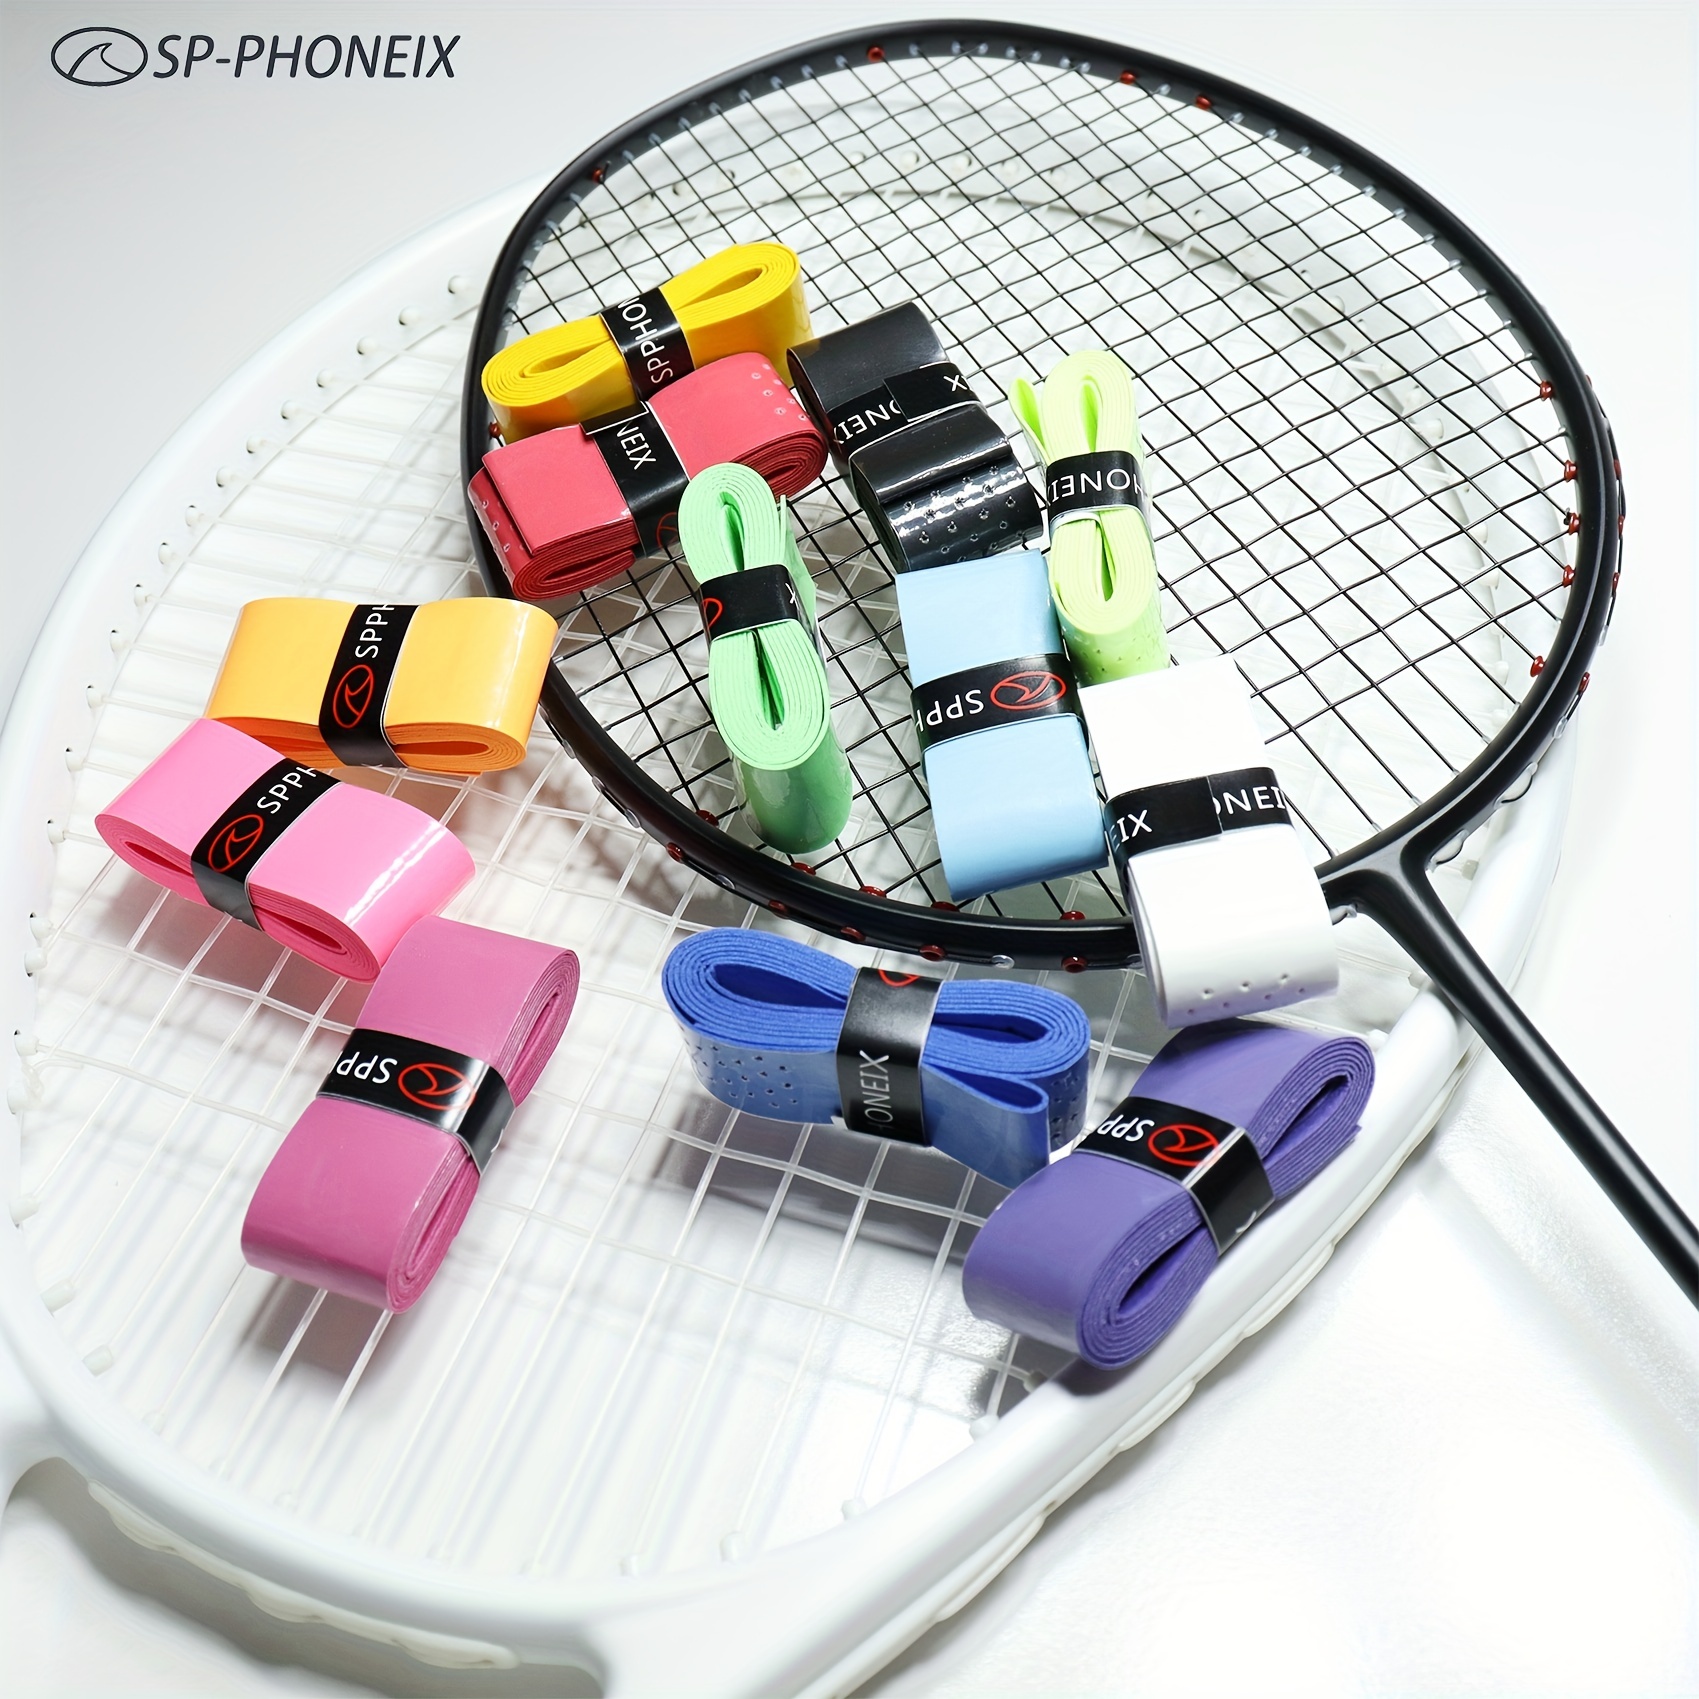  Tennis Racket Grip Tape Badminton Handle Overgrip Pickleball  Racquet Grips Replacement Wrap Padel Handle Overgrips Foam Dry Hands :  Sports & Outdoors